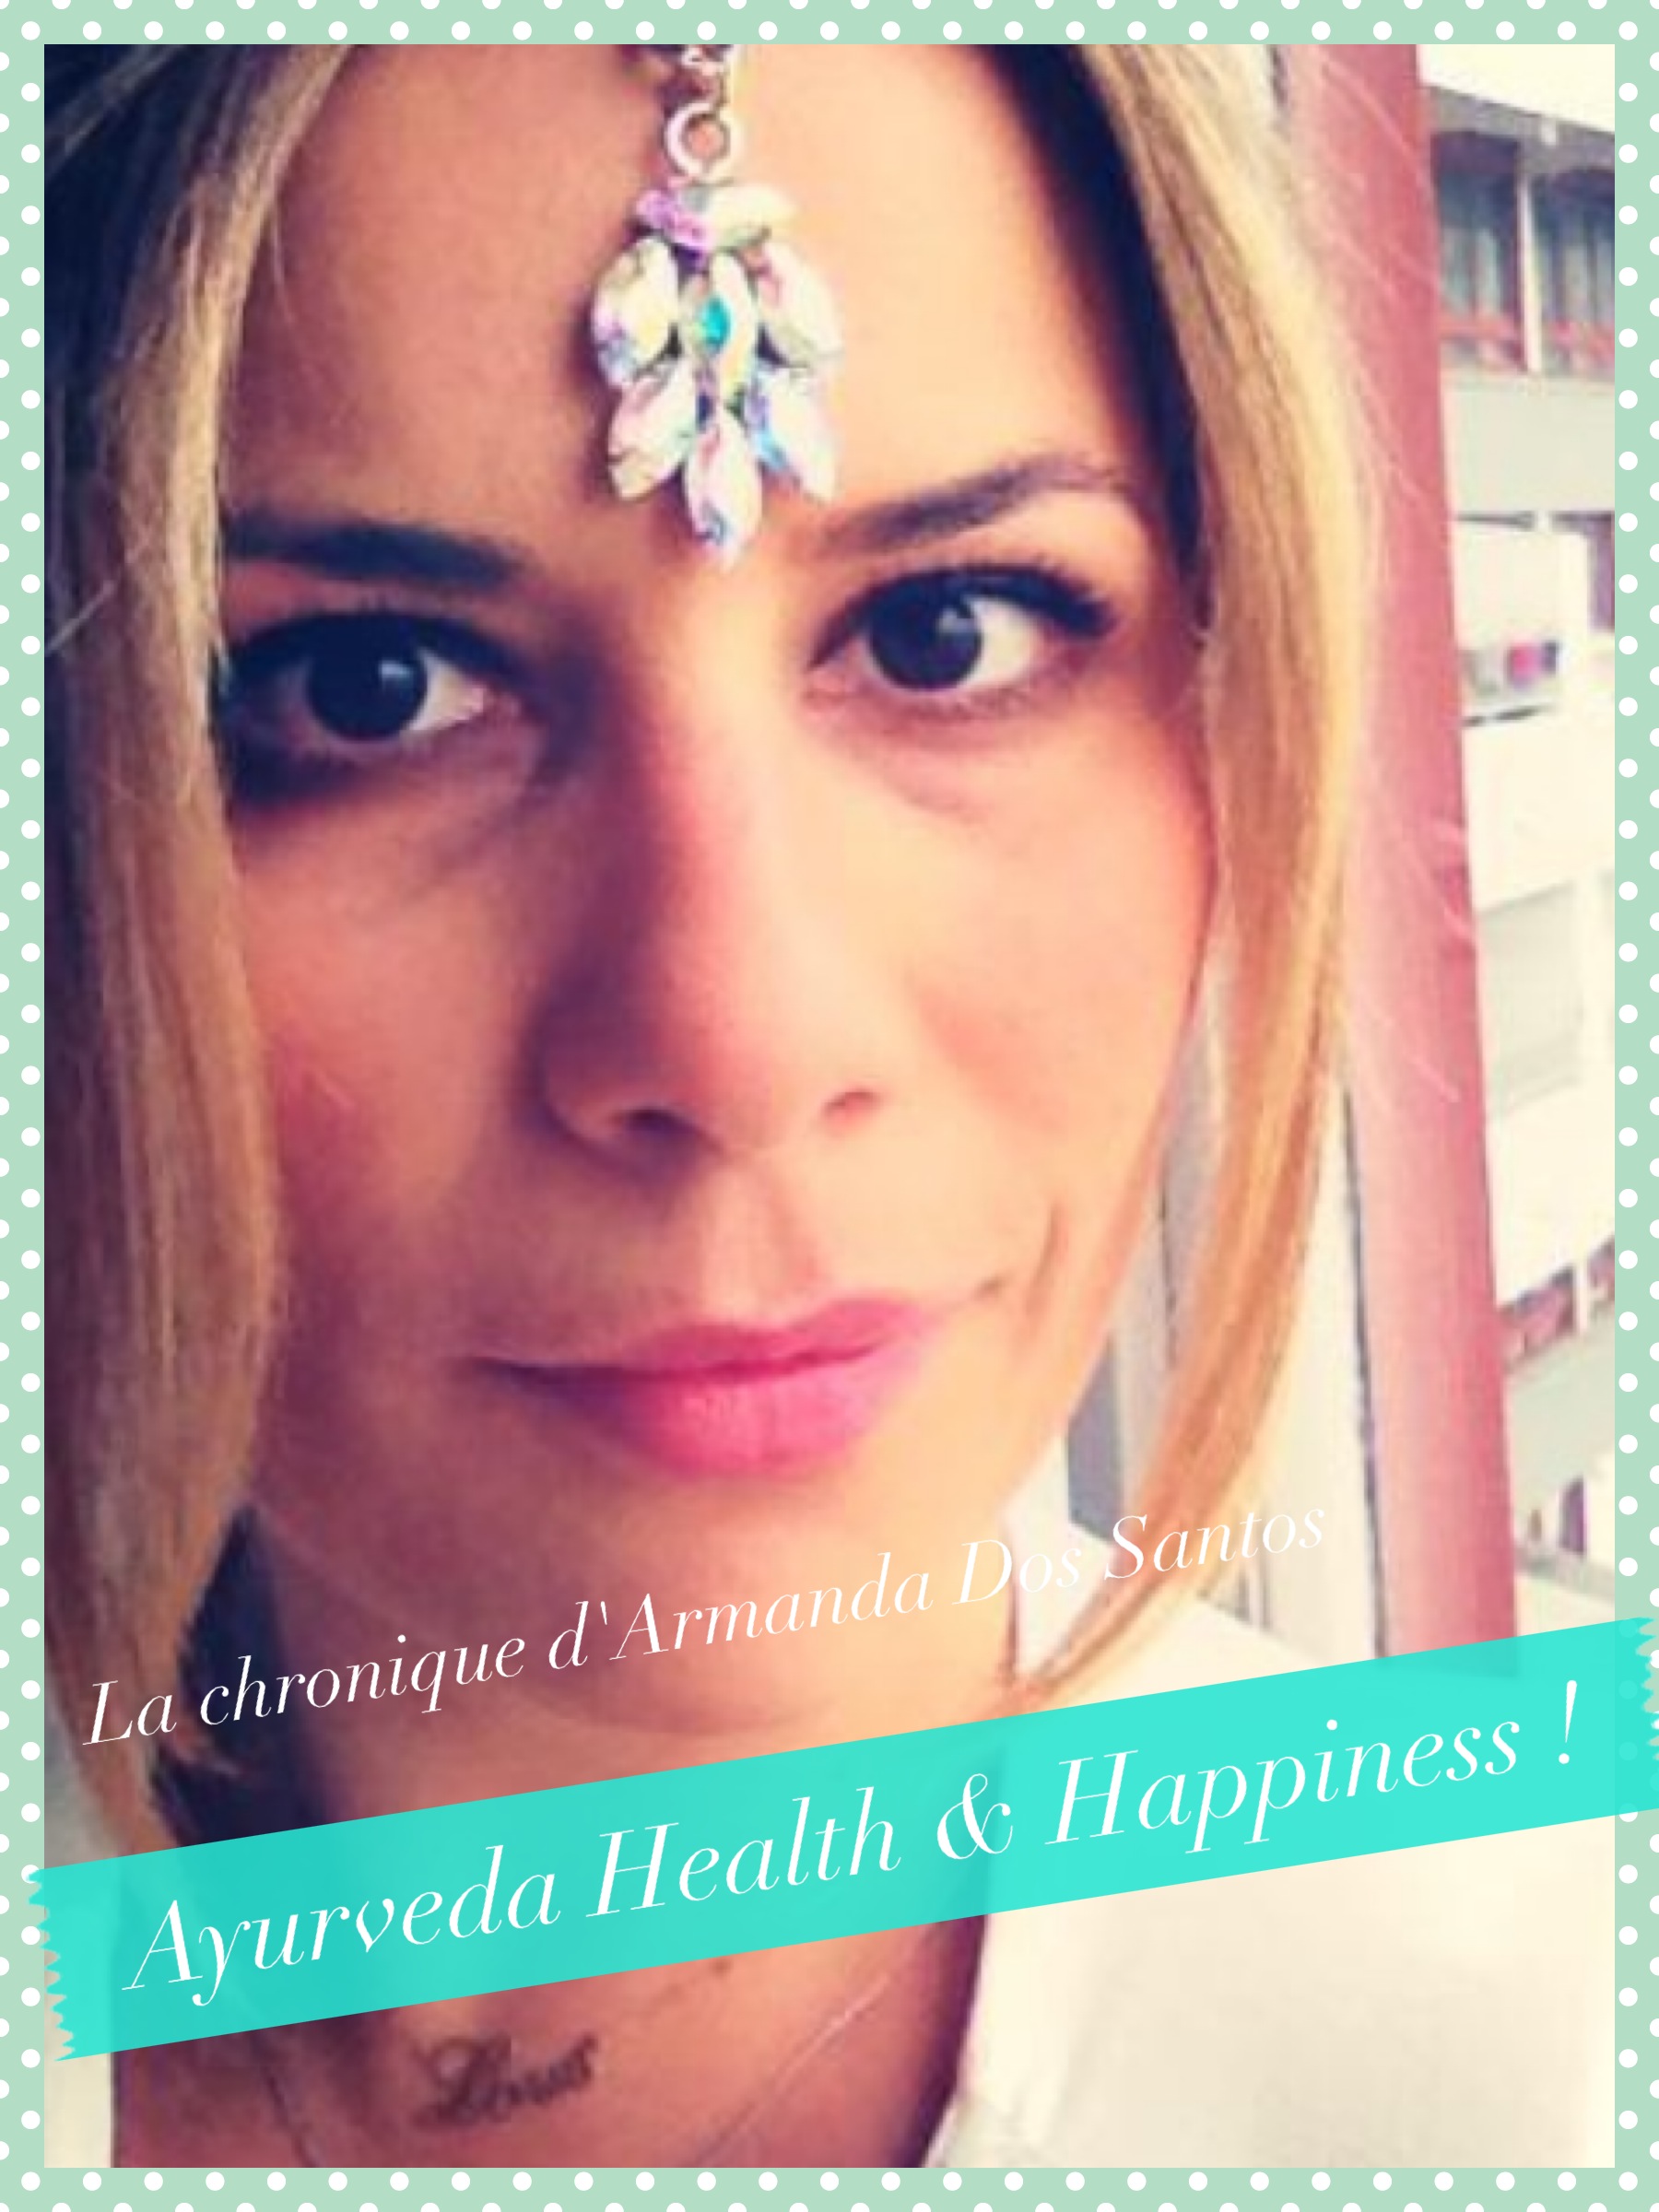 Ayurveda Health & Happinness ! Chronique du mercredi 30 octobre 2013